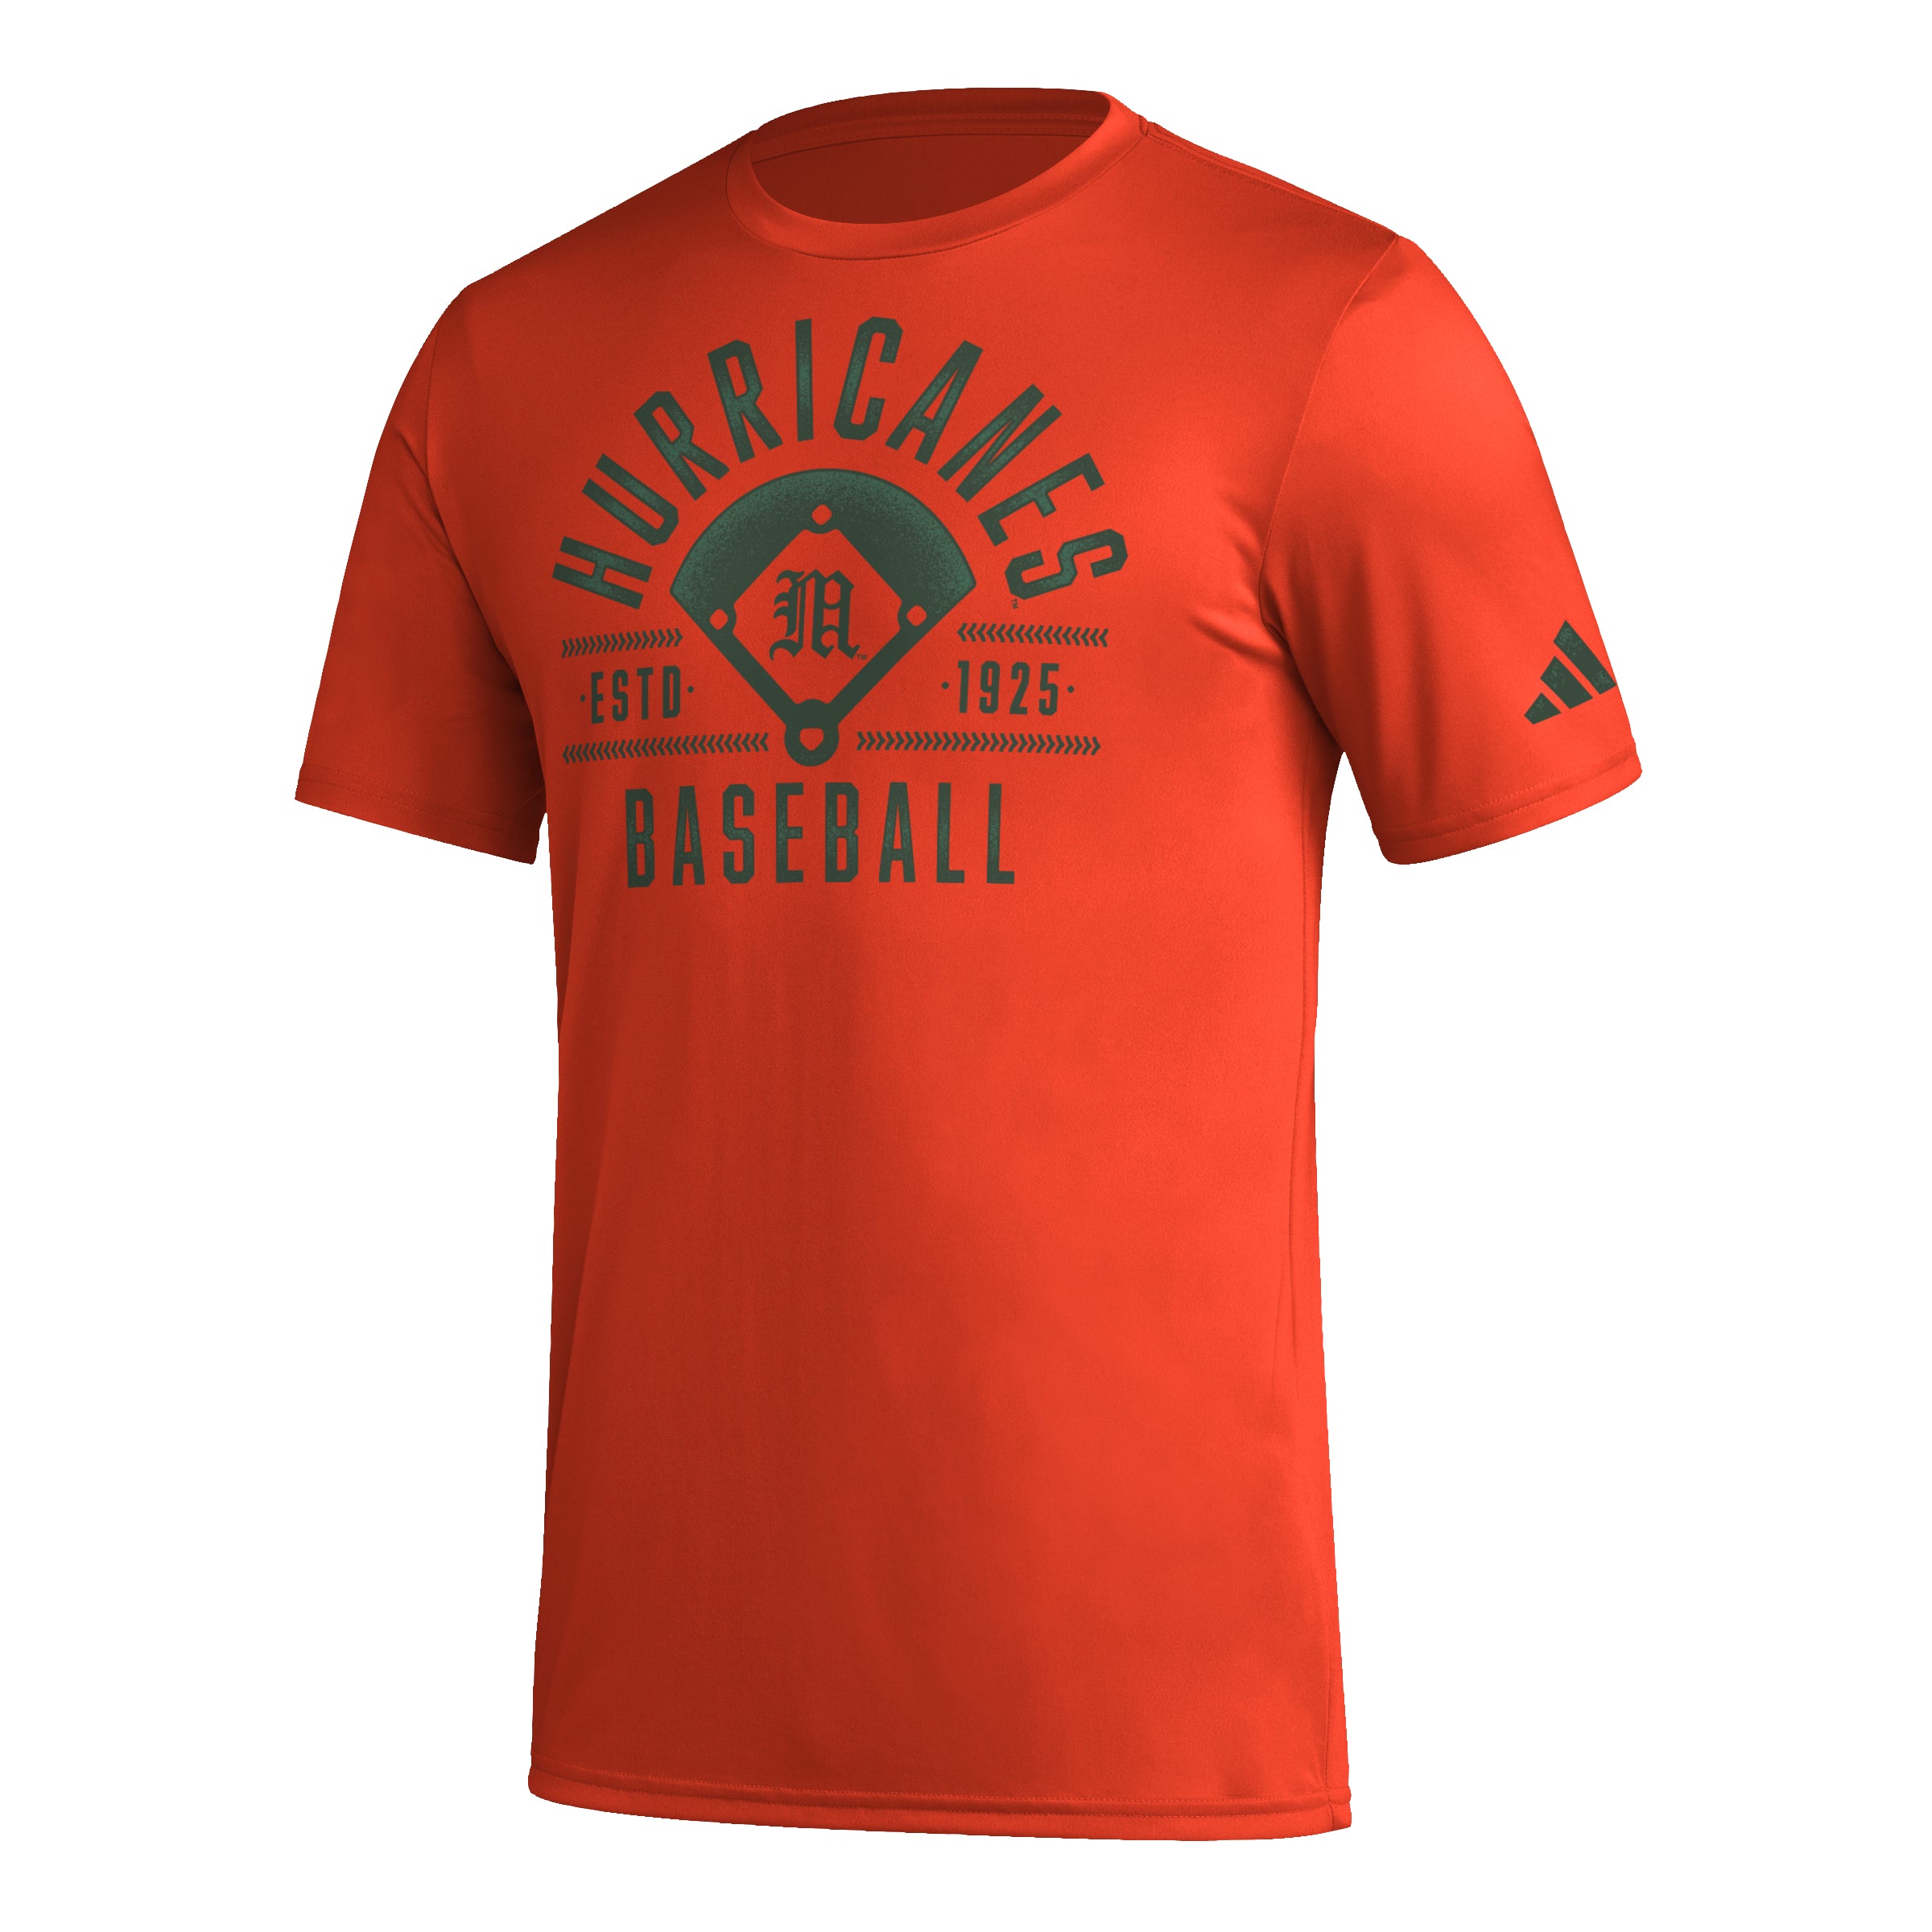 Miami Hurricanes Baseball (@CanesBaseball) / X